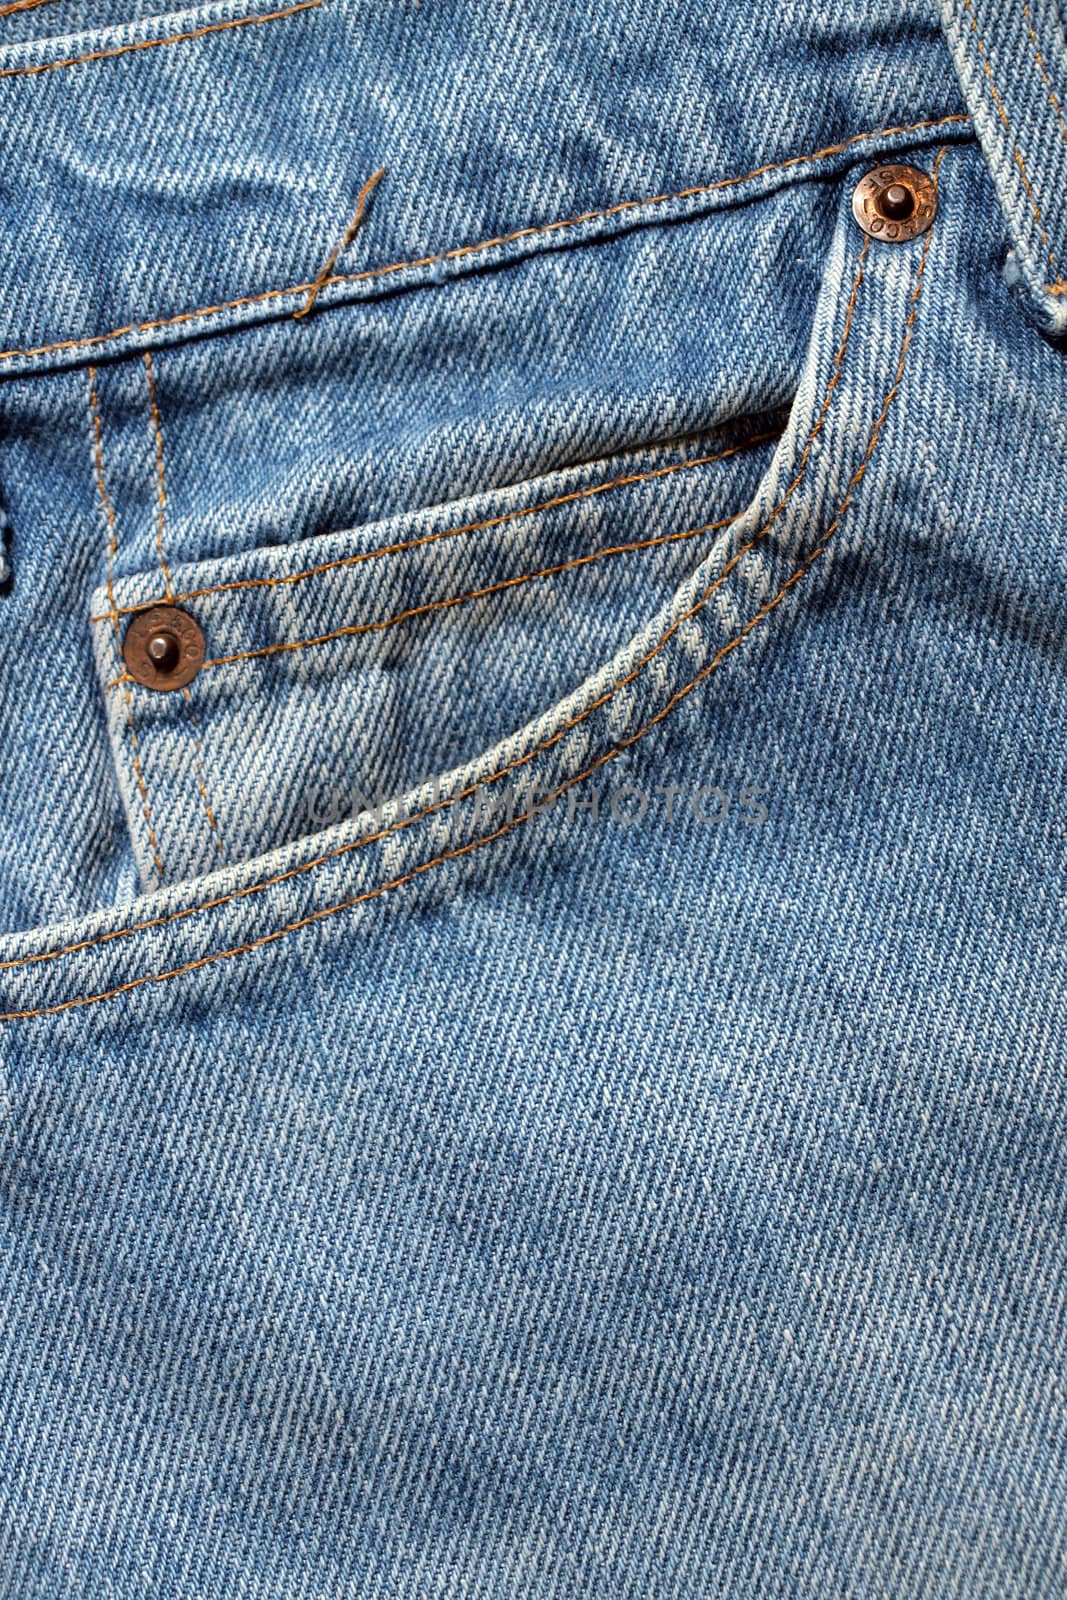 blue denim jeans texture, background